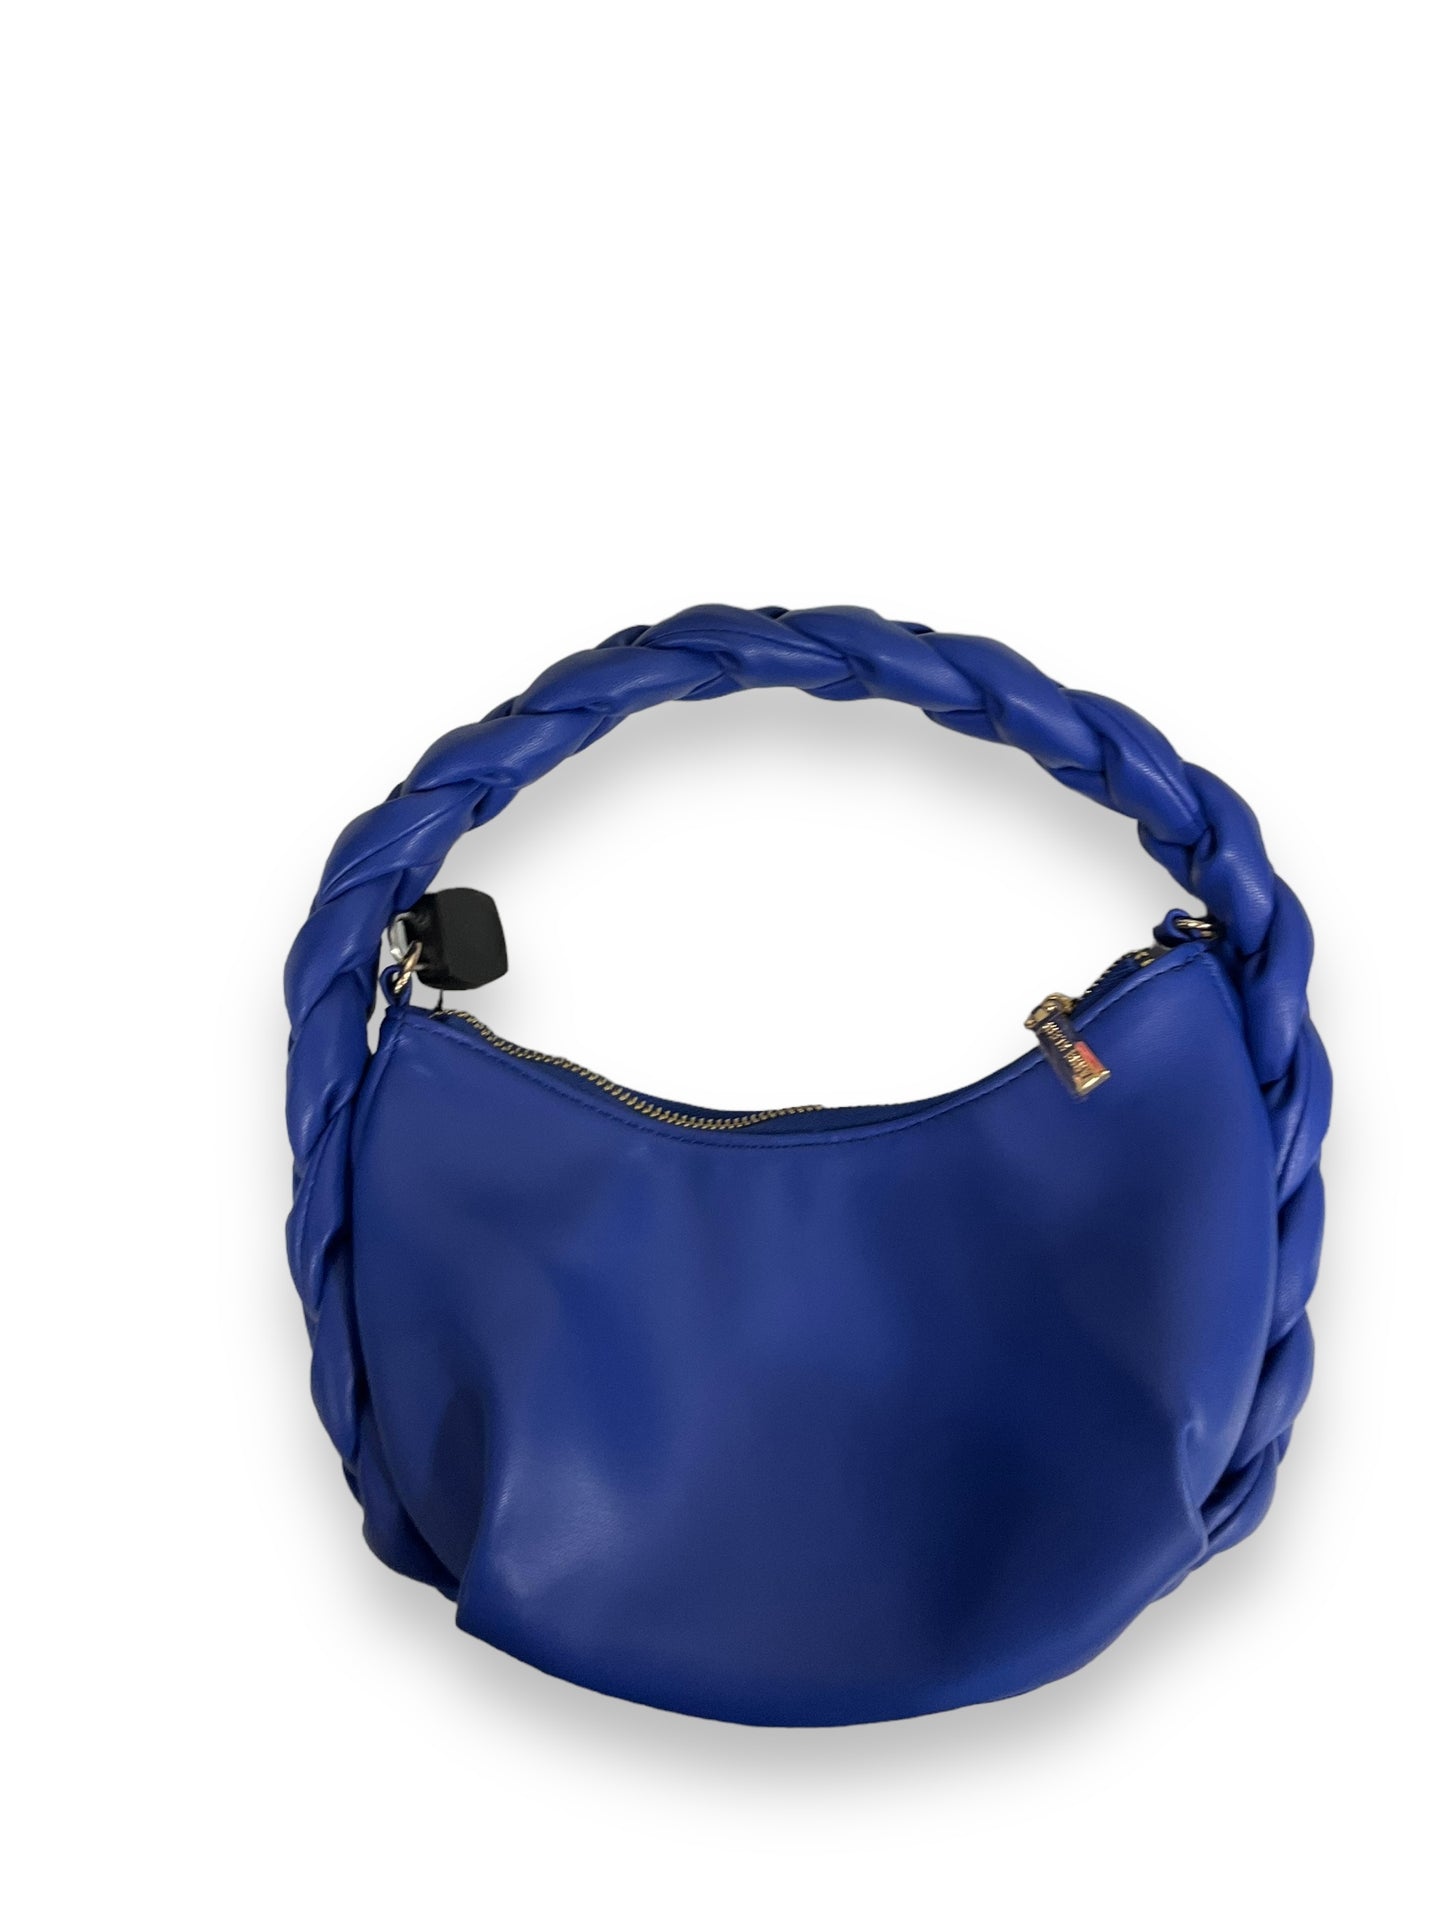 Handbag By Anne Klein  Size: Small